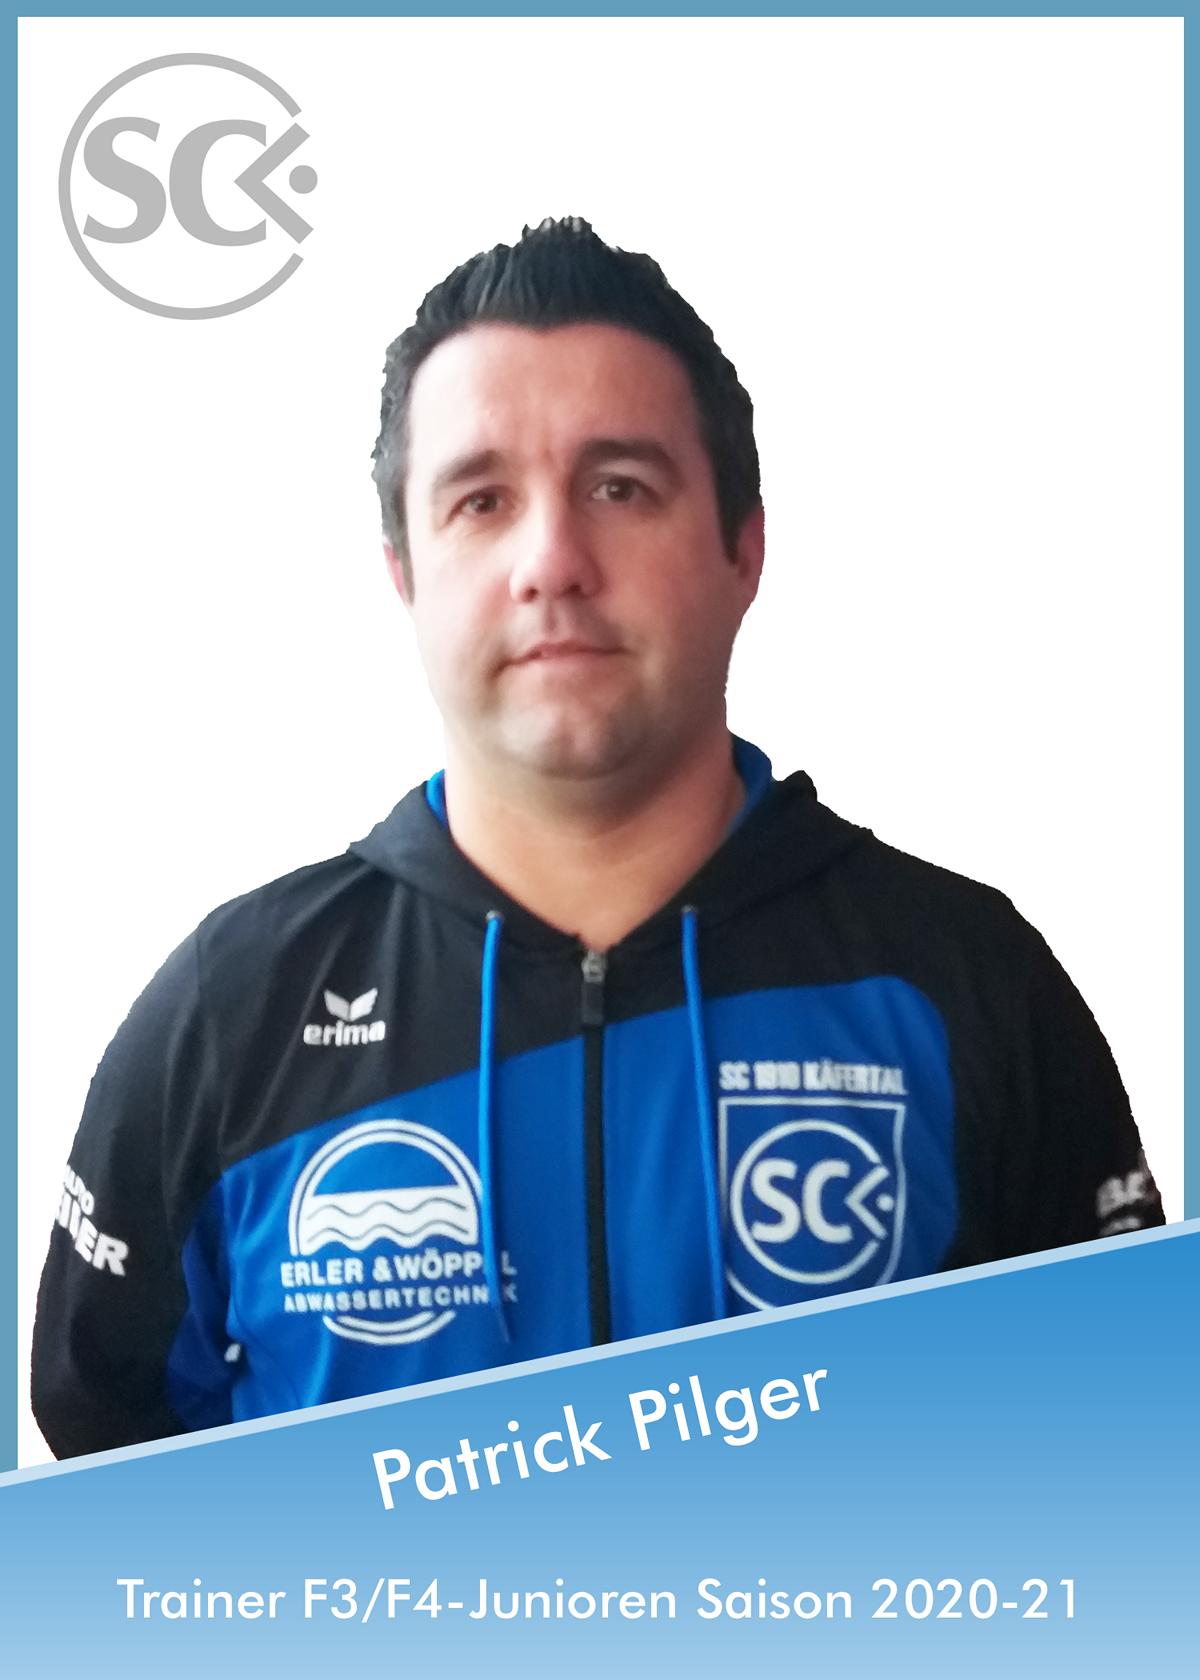 Patrick Pilger